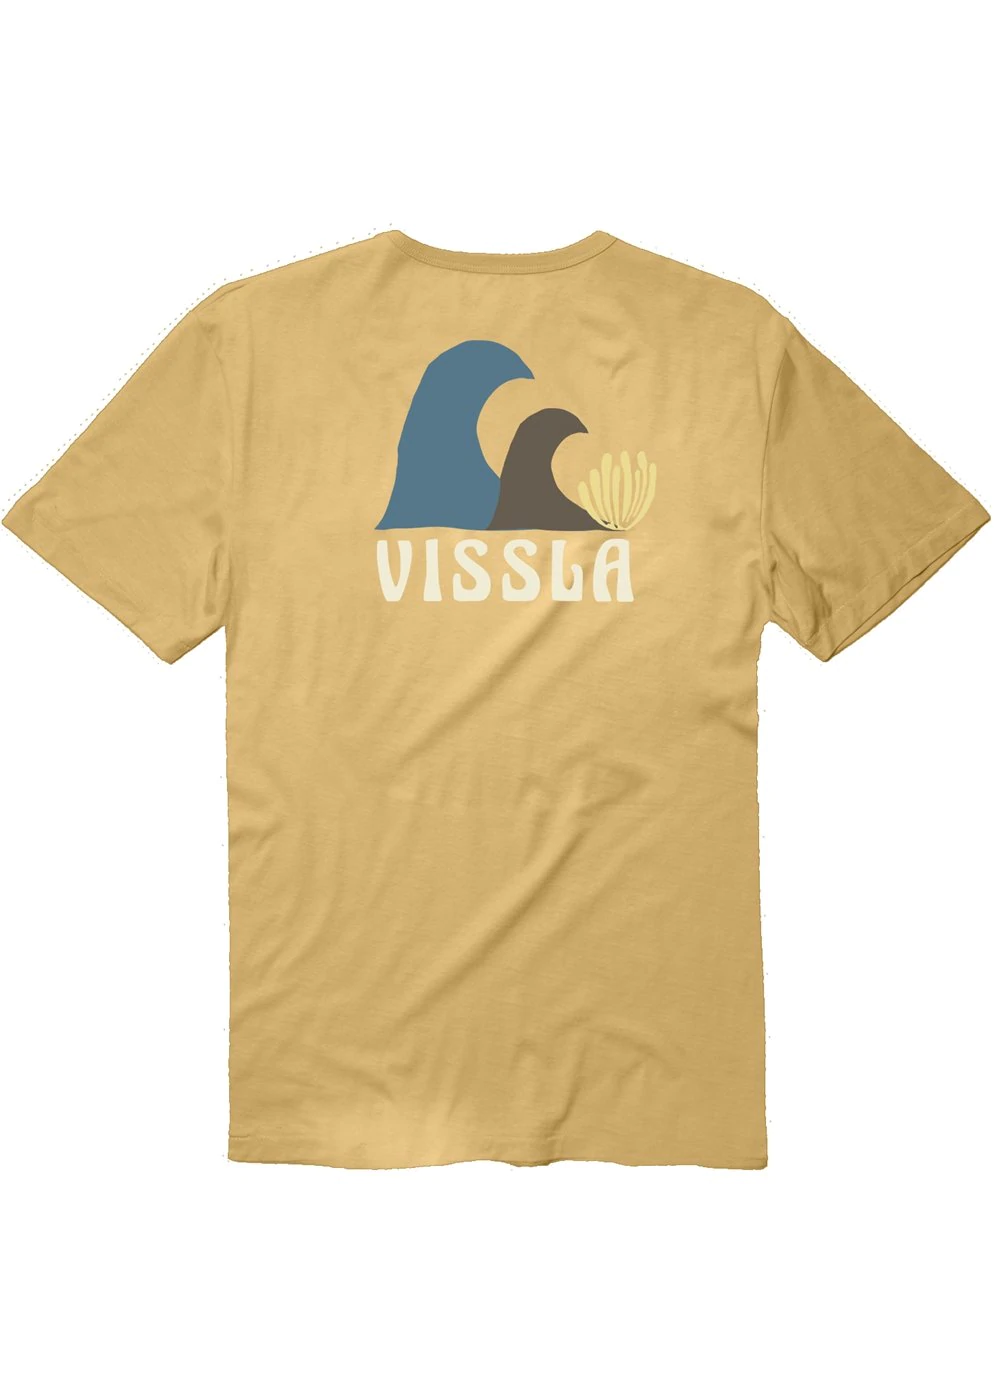 Vissla The Isle organic t-shirt ale